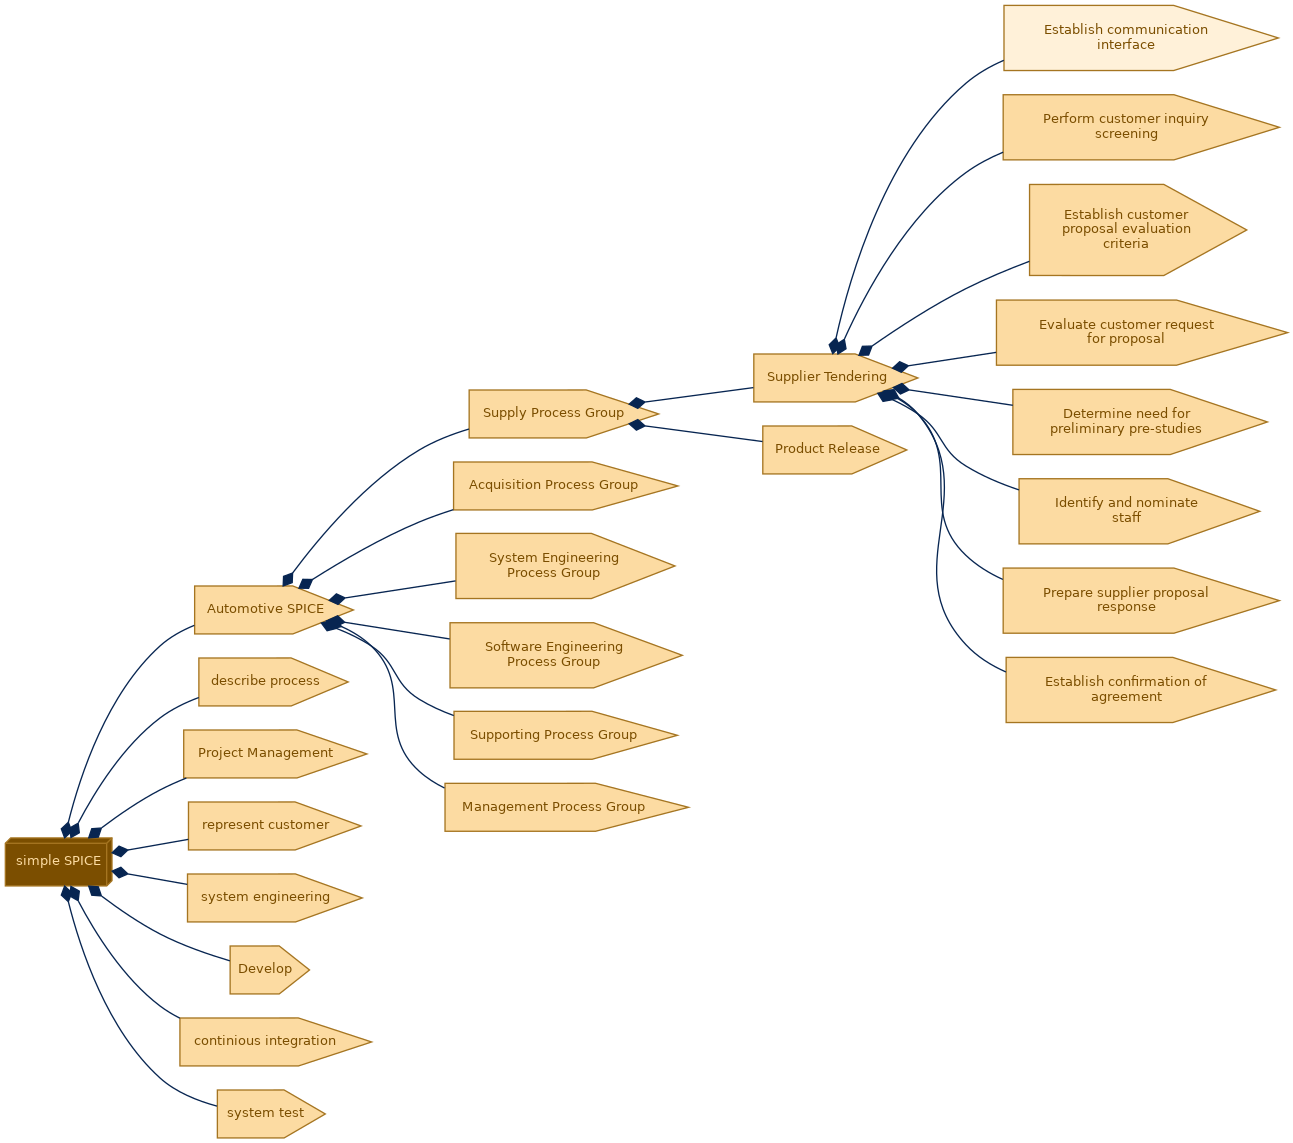 spem diagram of the activity breakdown: Establish communication interface